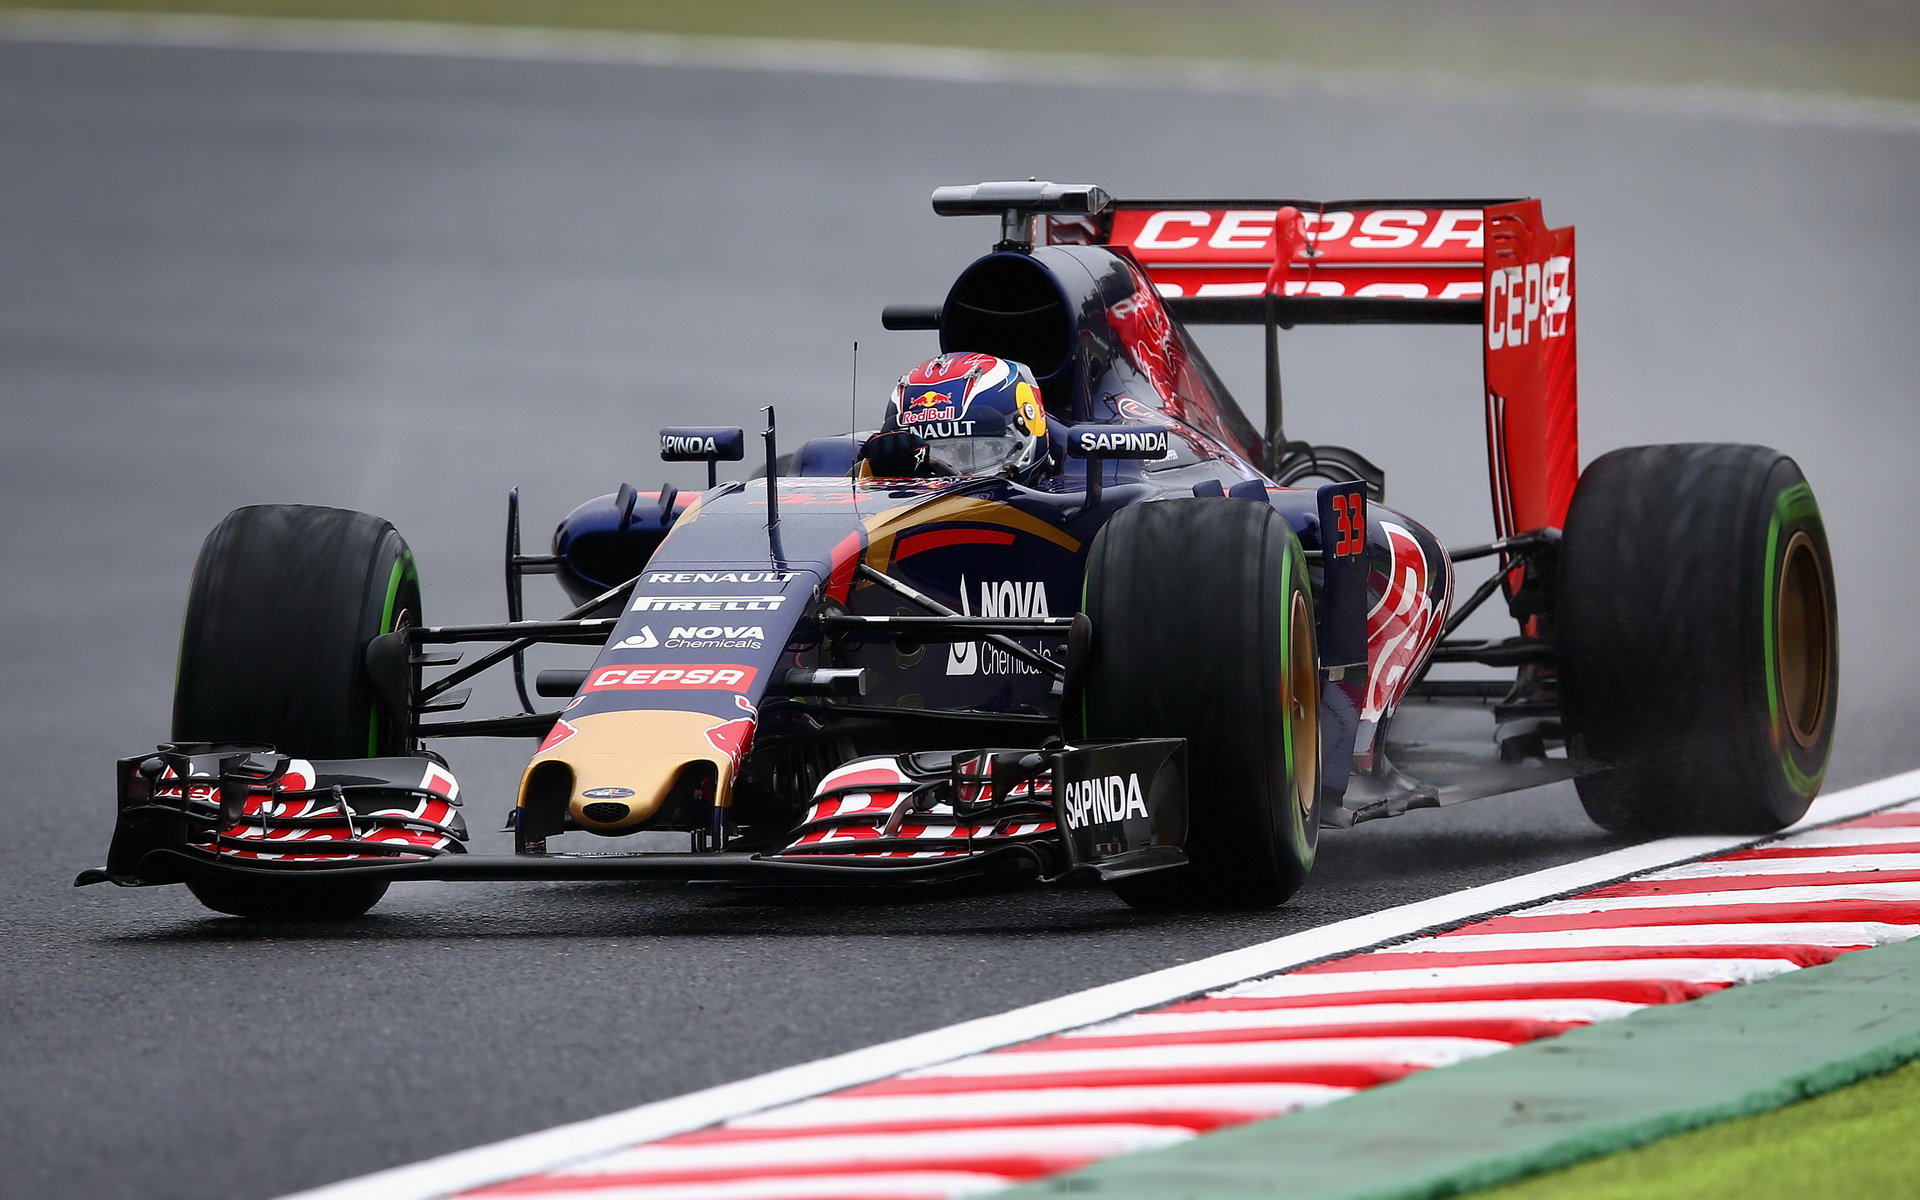 Max Verstappen, GP Japonska (Suzuka)